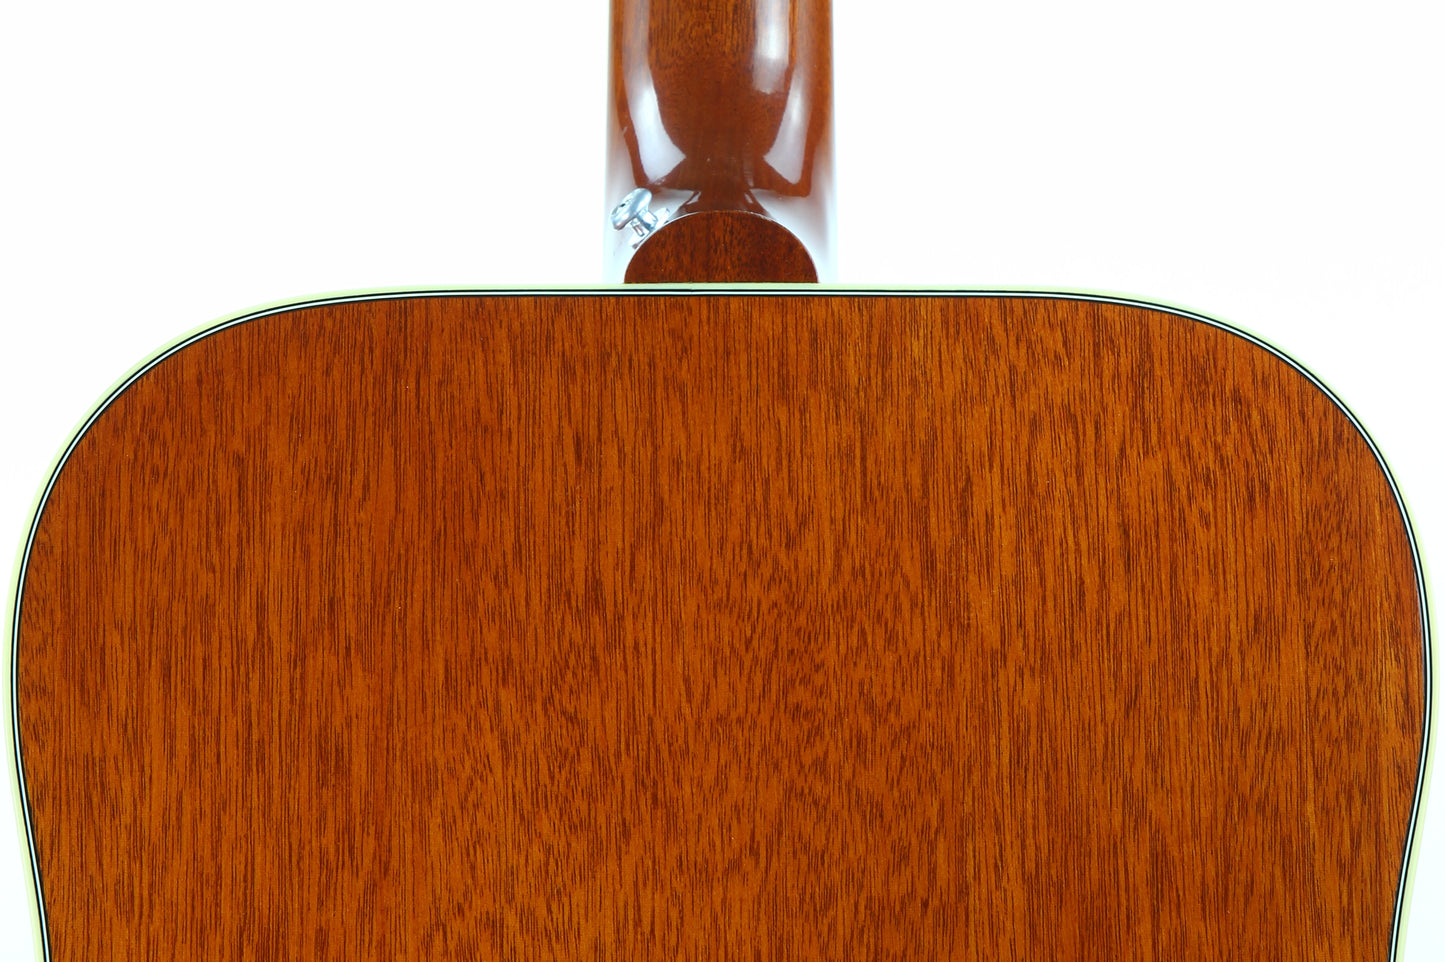 2011 Gibson Montana Hummingbird Standard Vintage Honeyburst Sunburst - Player Dreadnought j45 dove